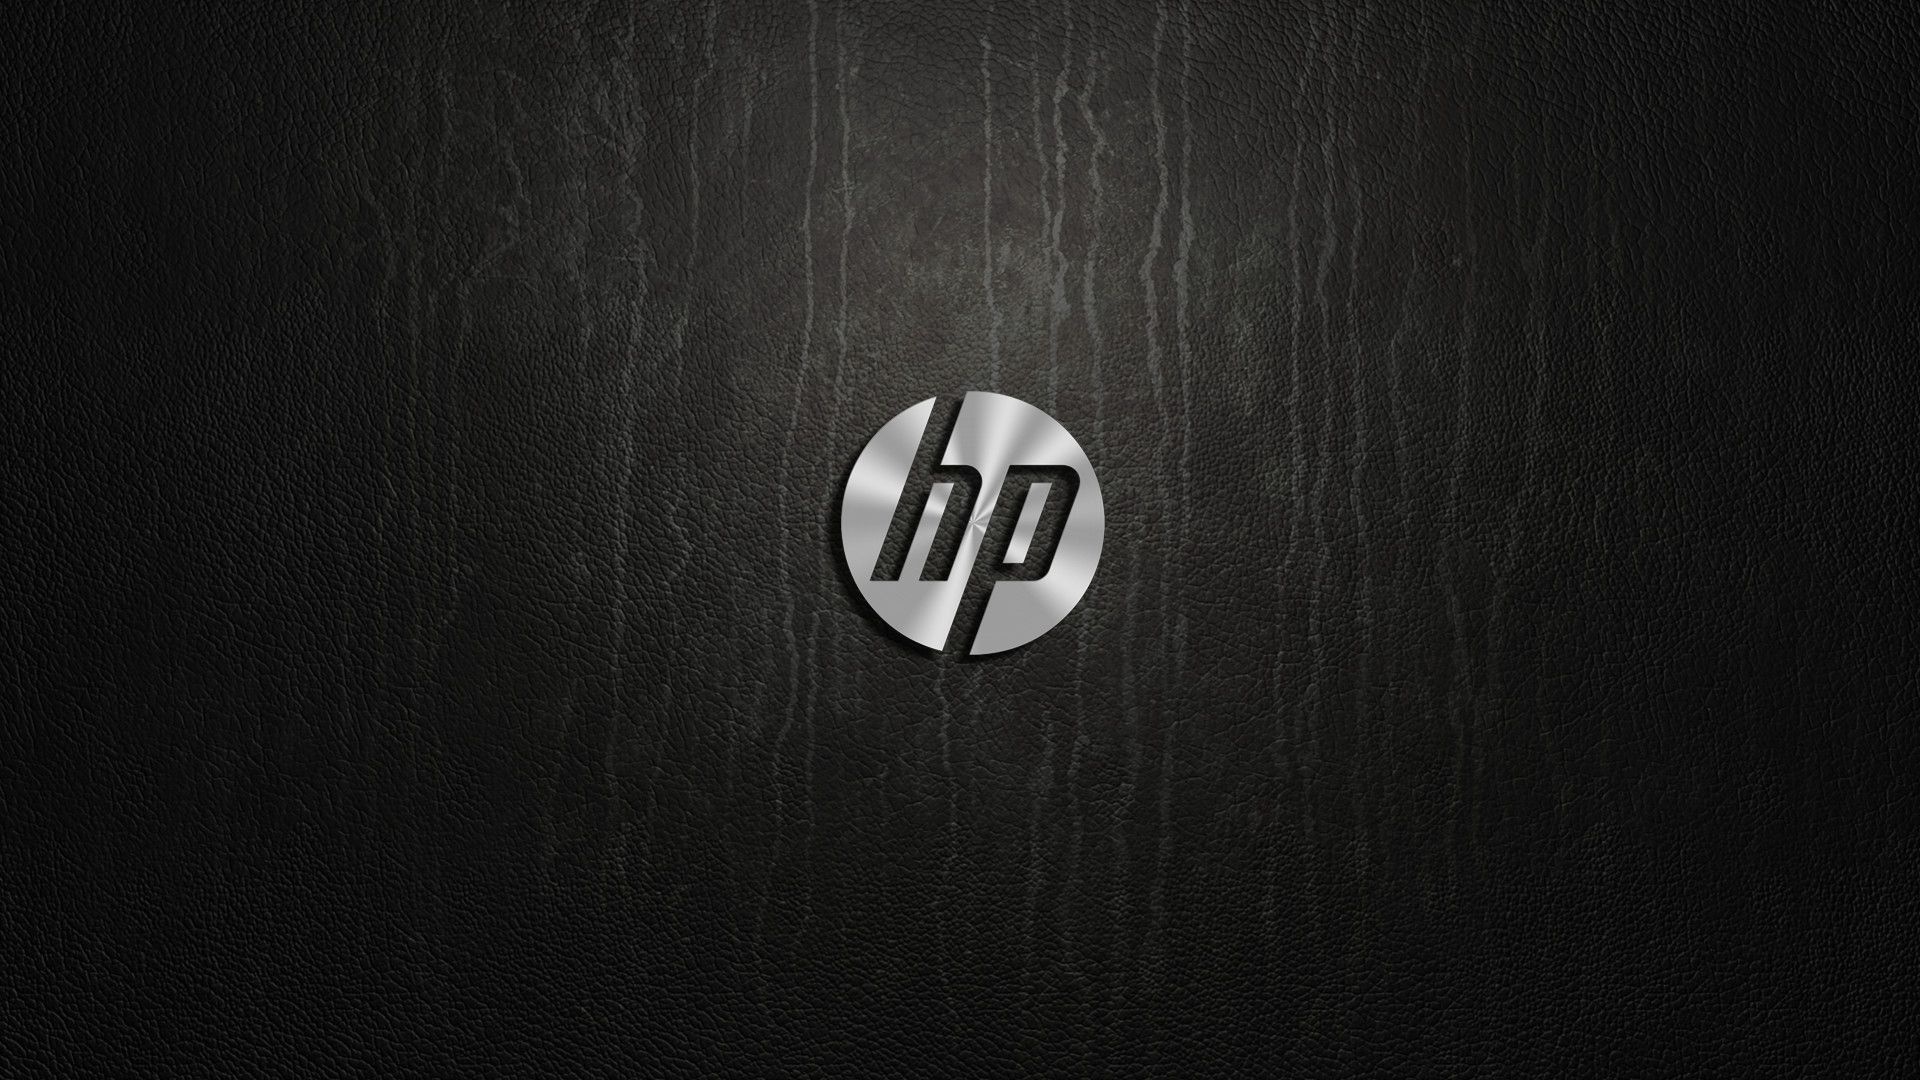 HP, Computer wallpapers, Stylish designs, Personal computing, 1920x1080 Full HD Desktop